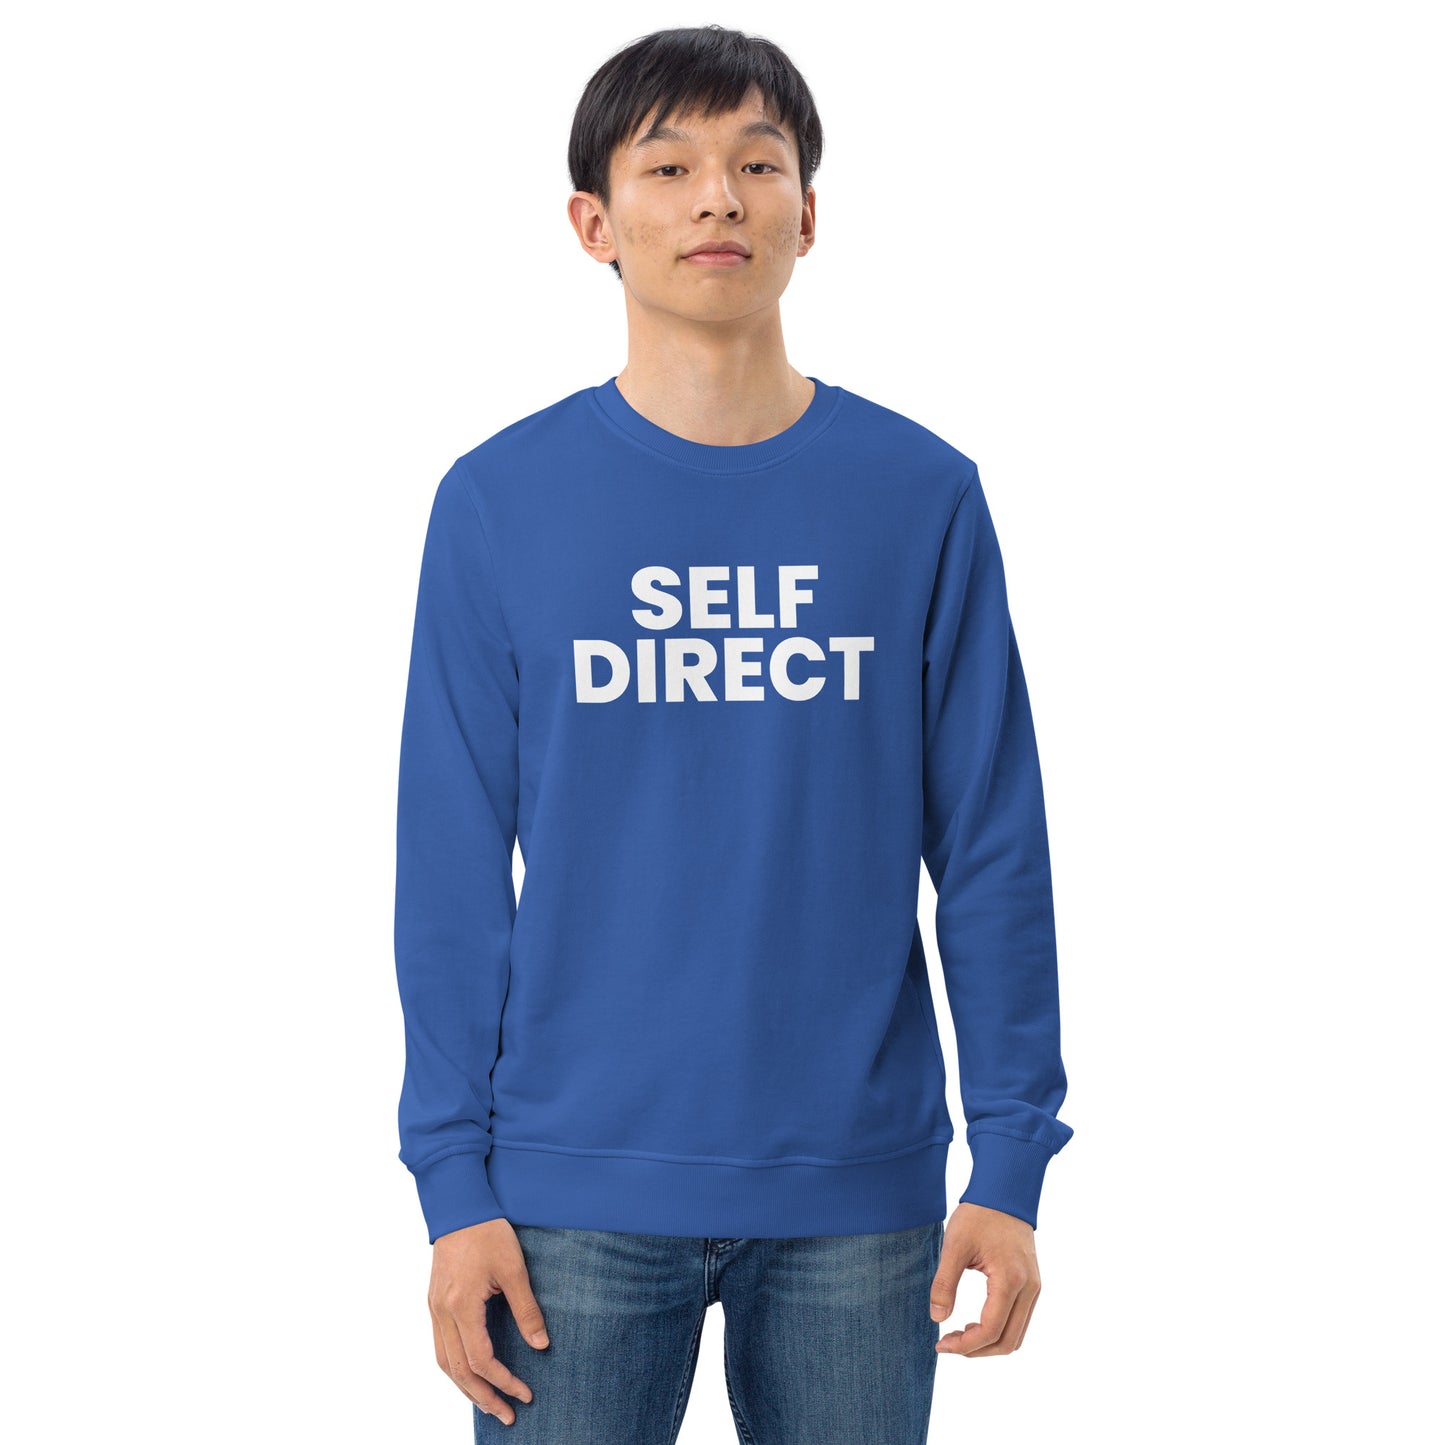 Self Direct Dark Sweatshirt